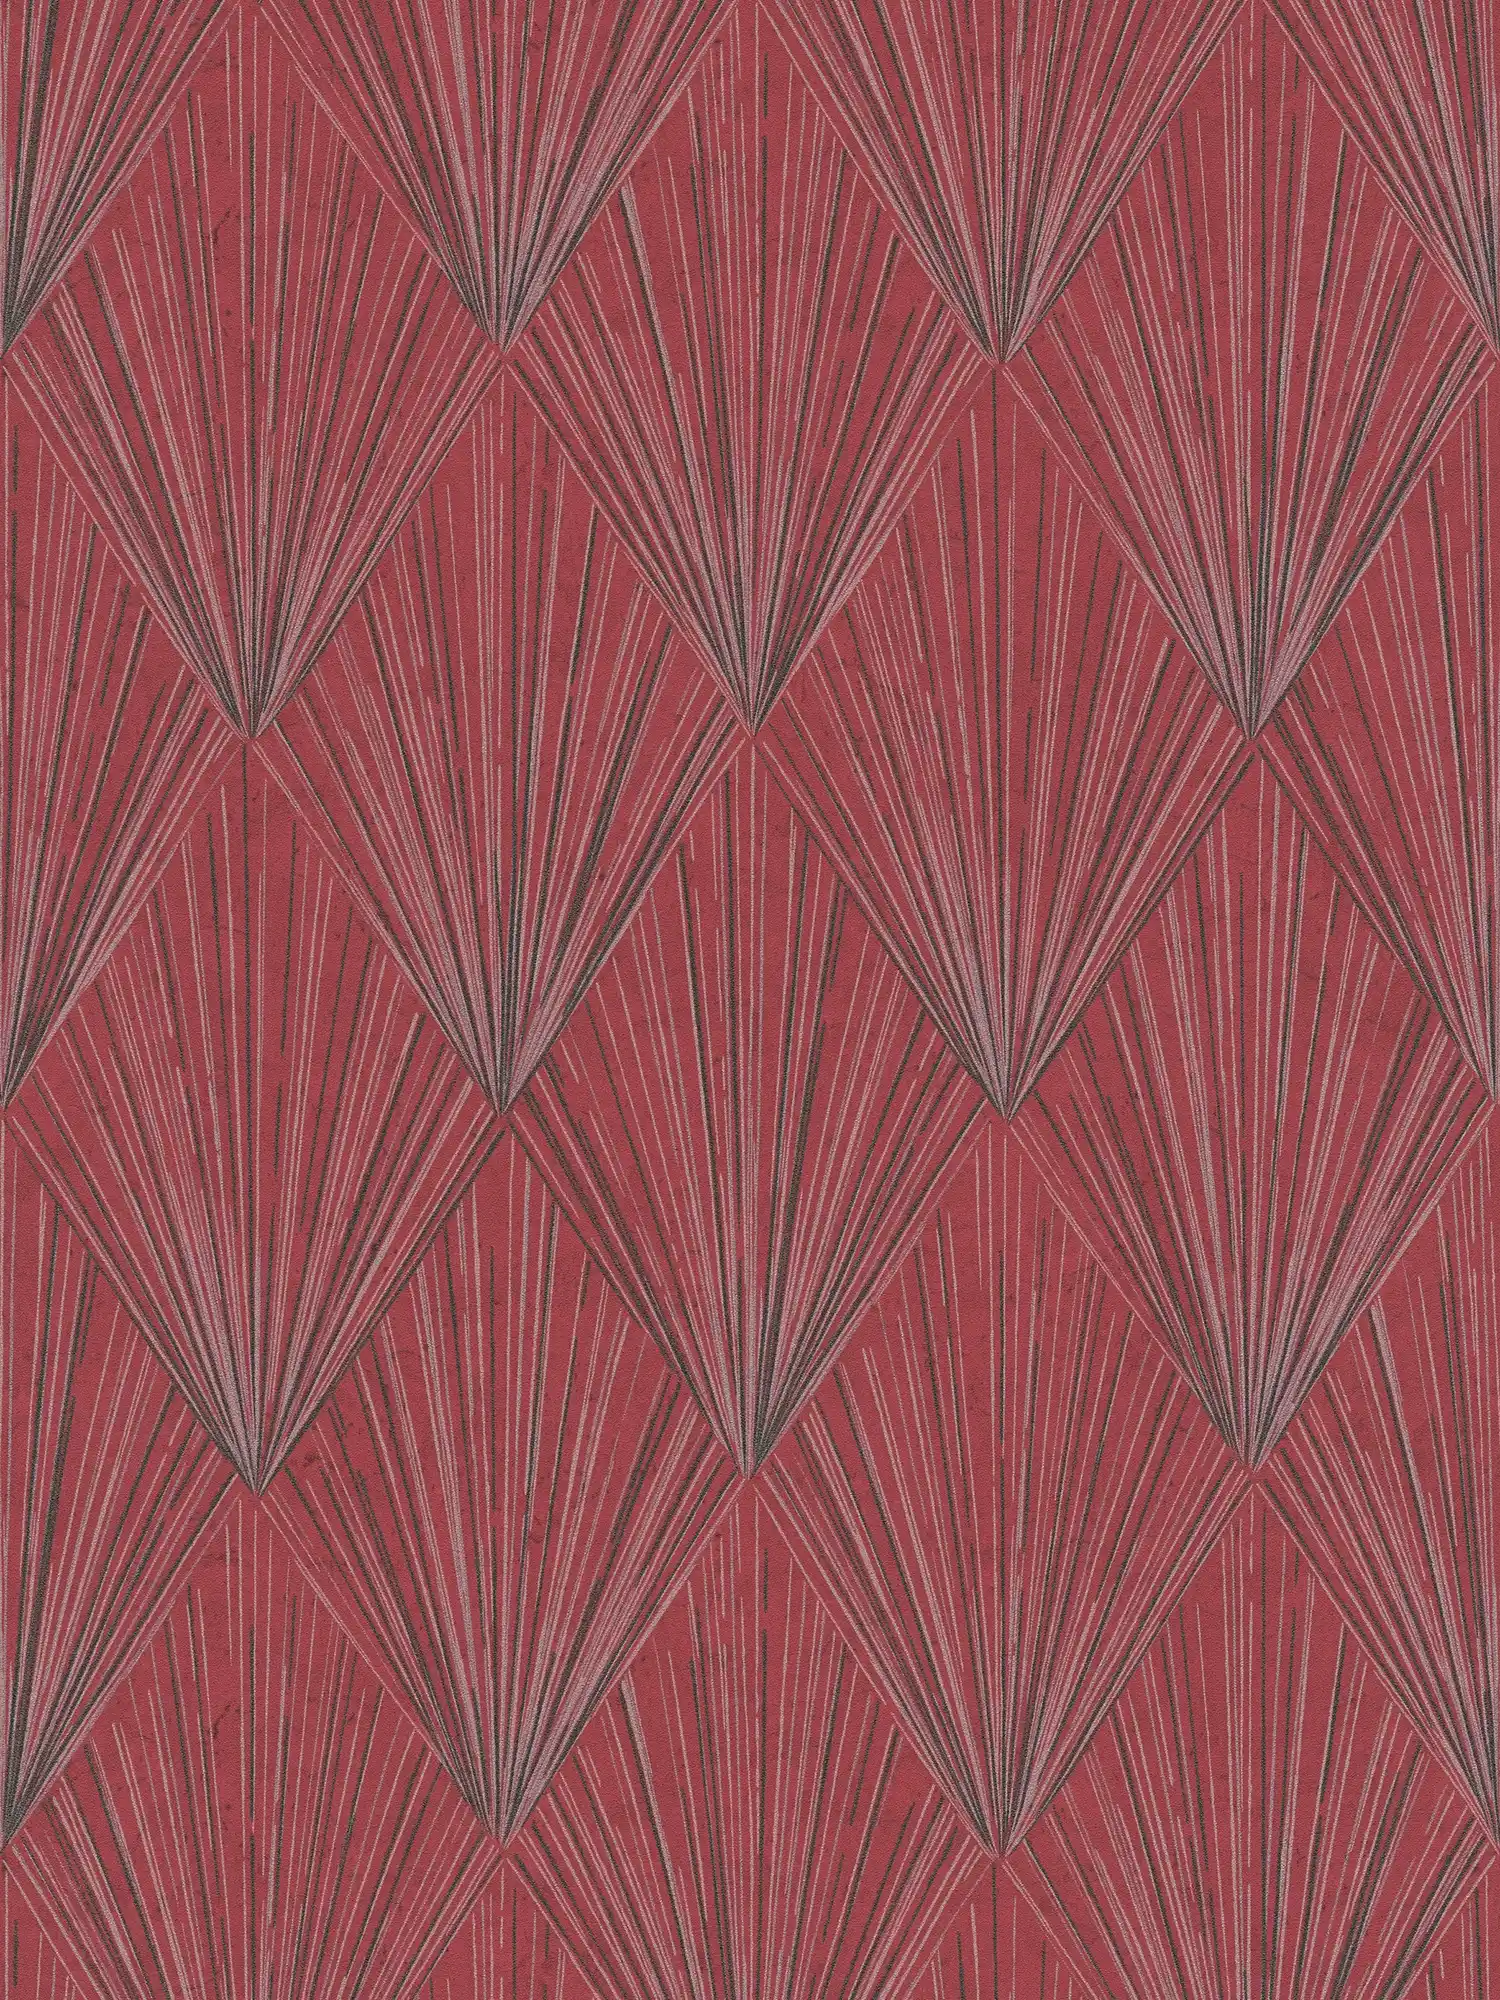 Wallpaper with modern art deco pattern & metallic effect - metallic, red, black
